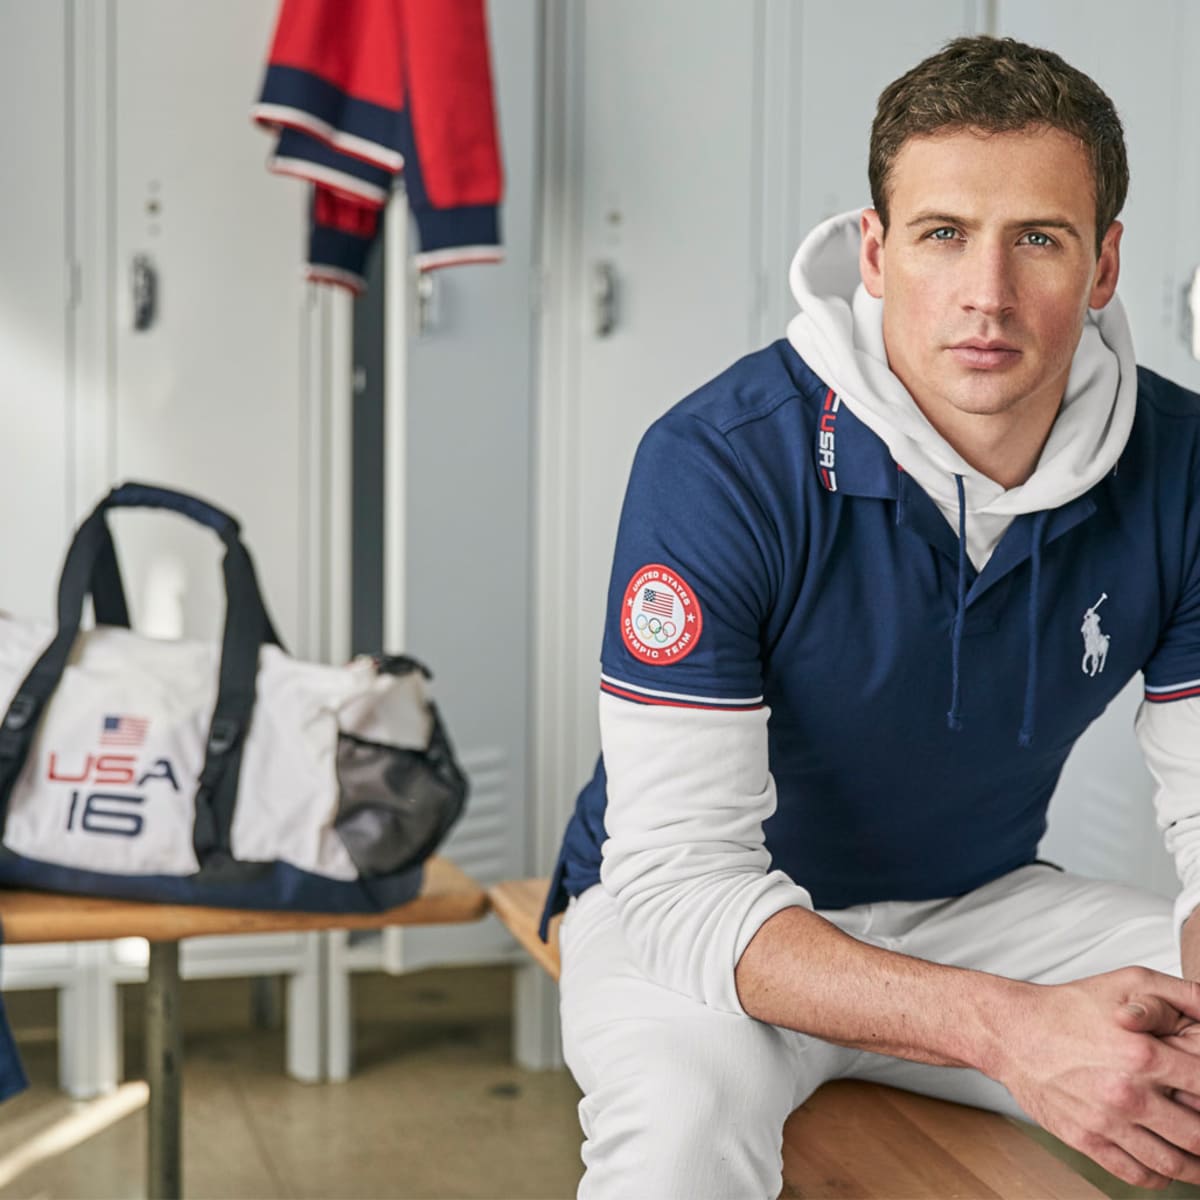 Oakley Presents Olympics Team USA Eyewear - My Life on (and off